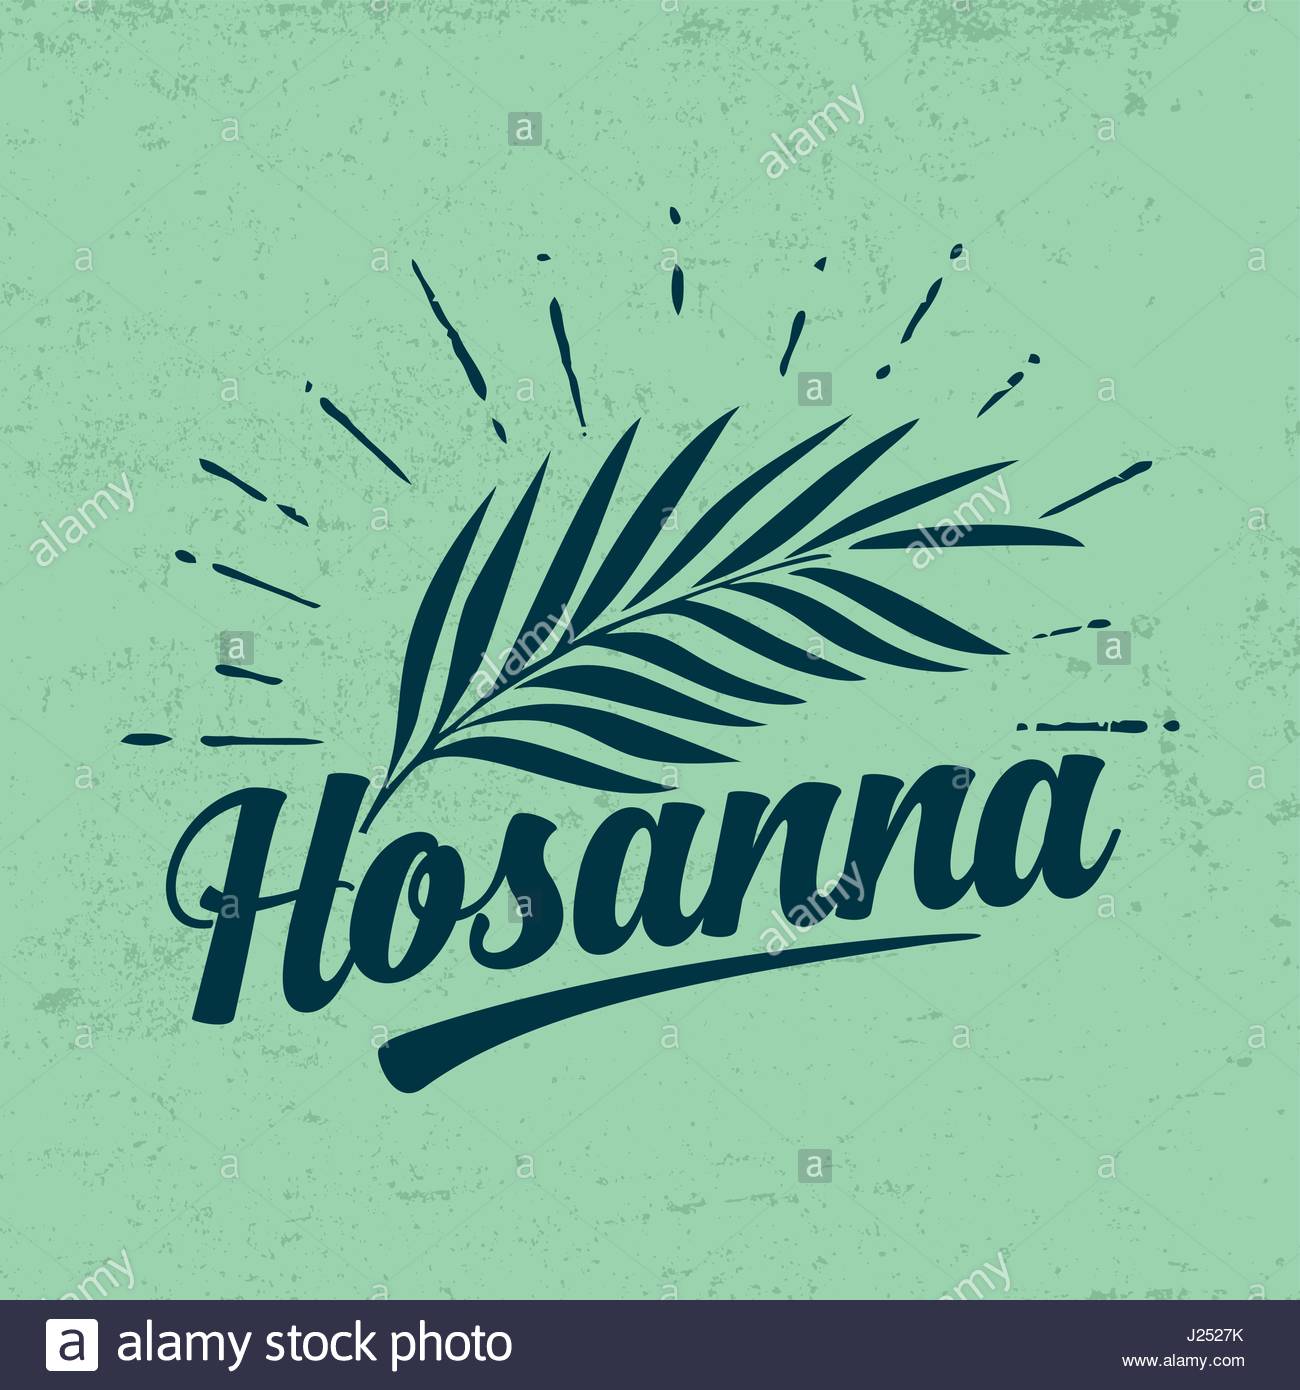 Hosanna And Palm Branch Stock Vector Art Illustration